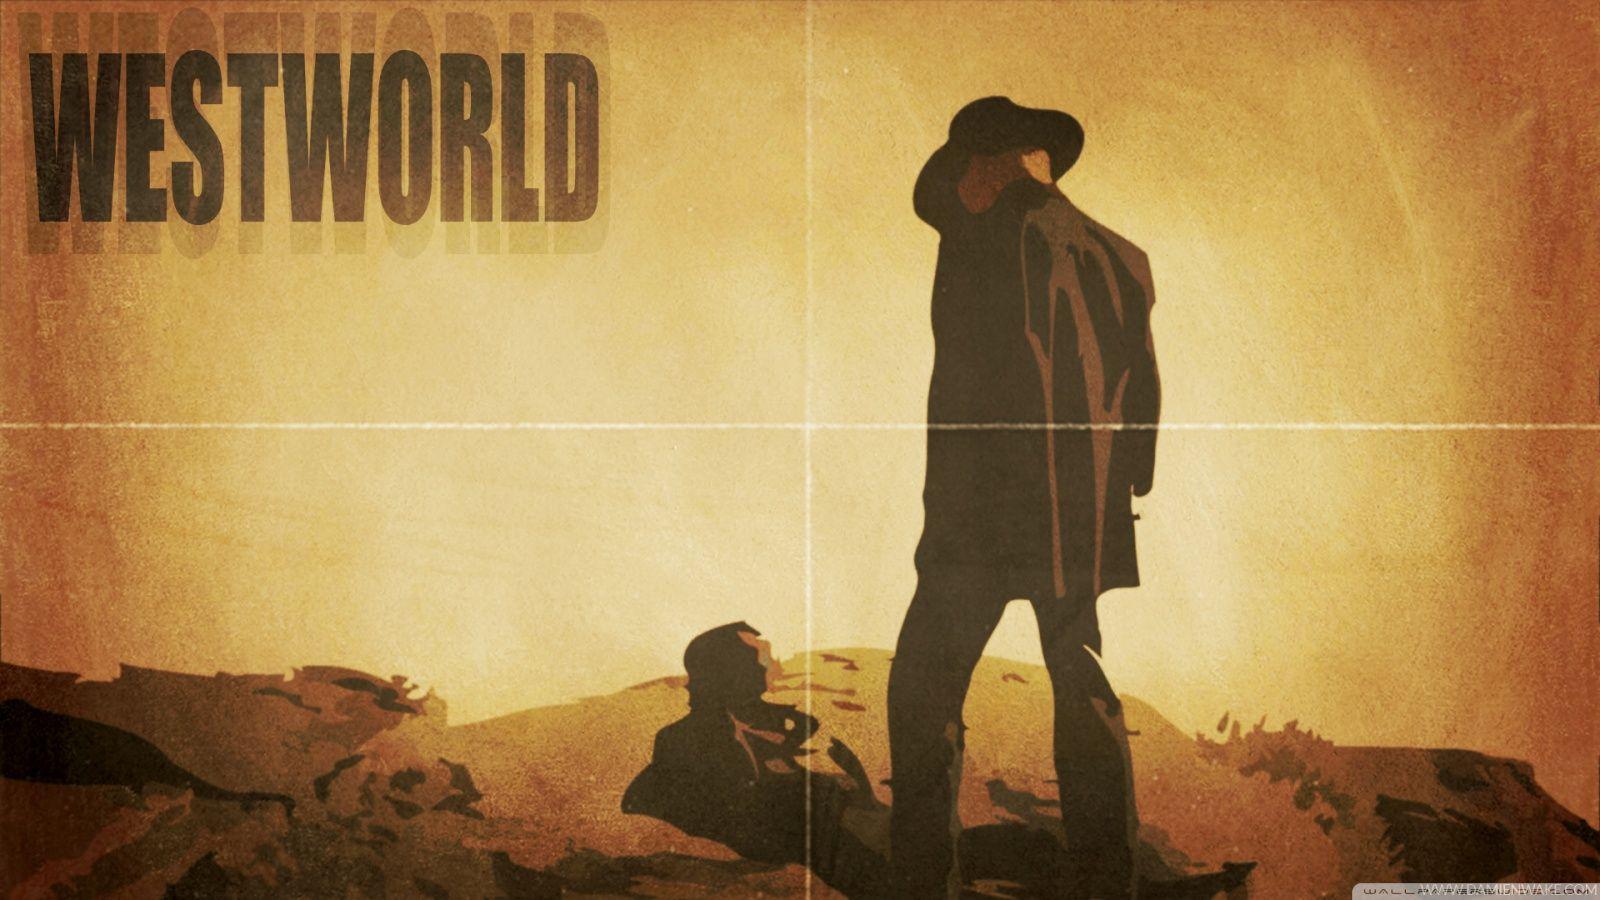 Westworld HD desktop wallpaper, High Definition